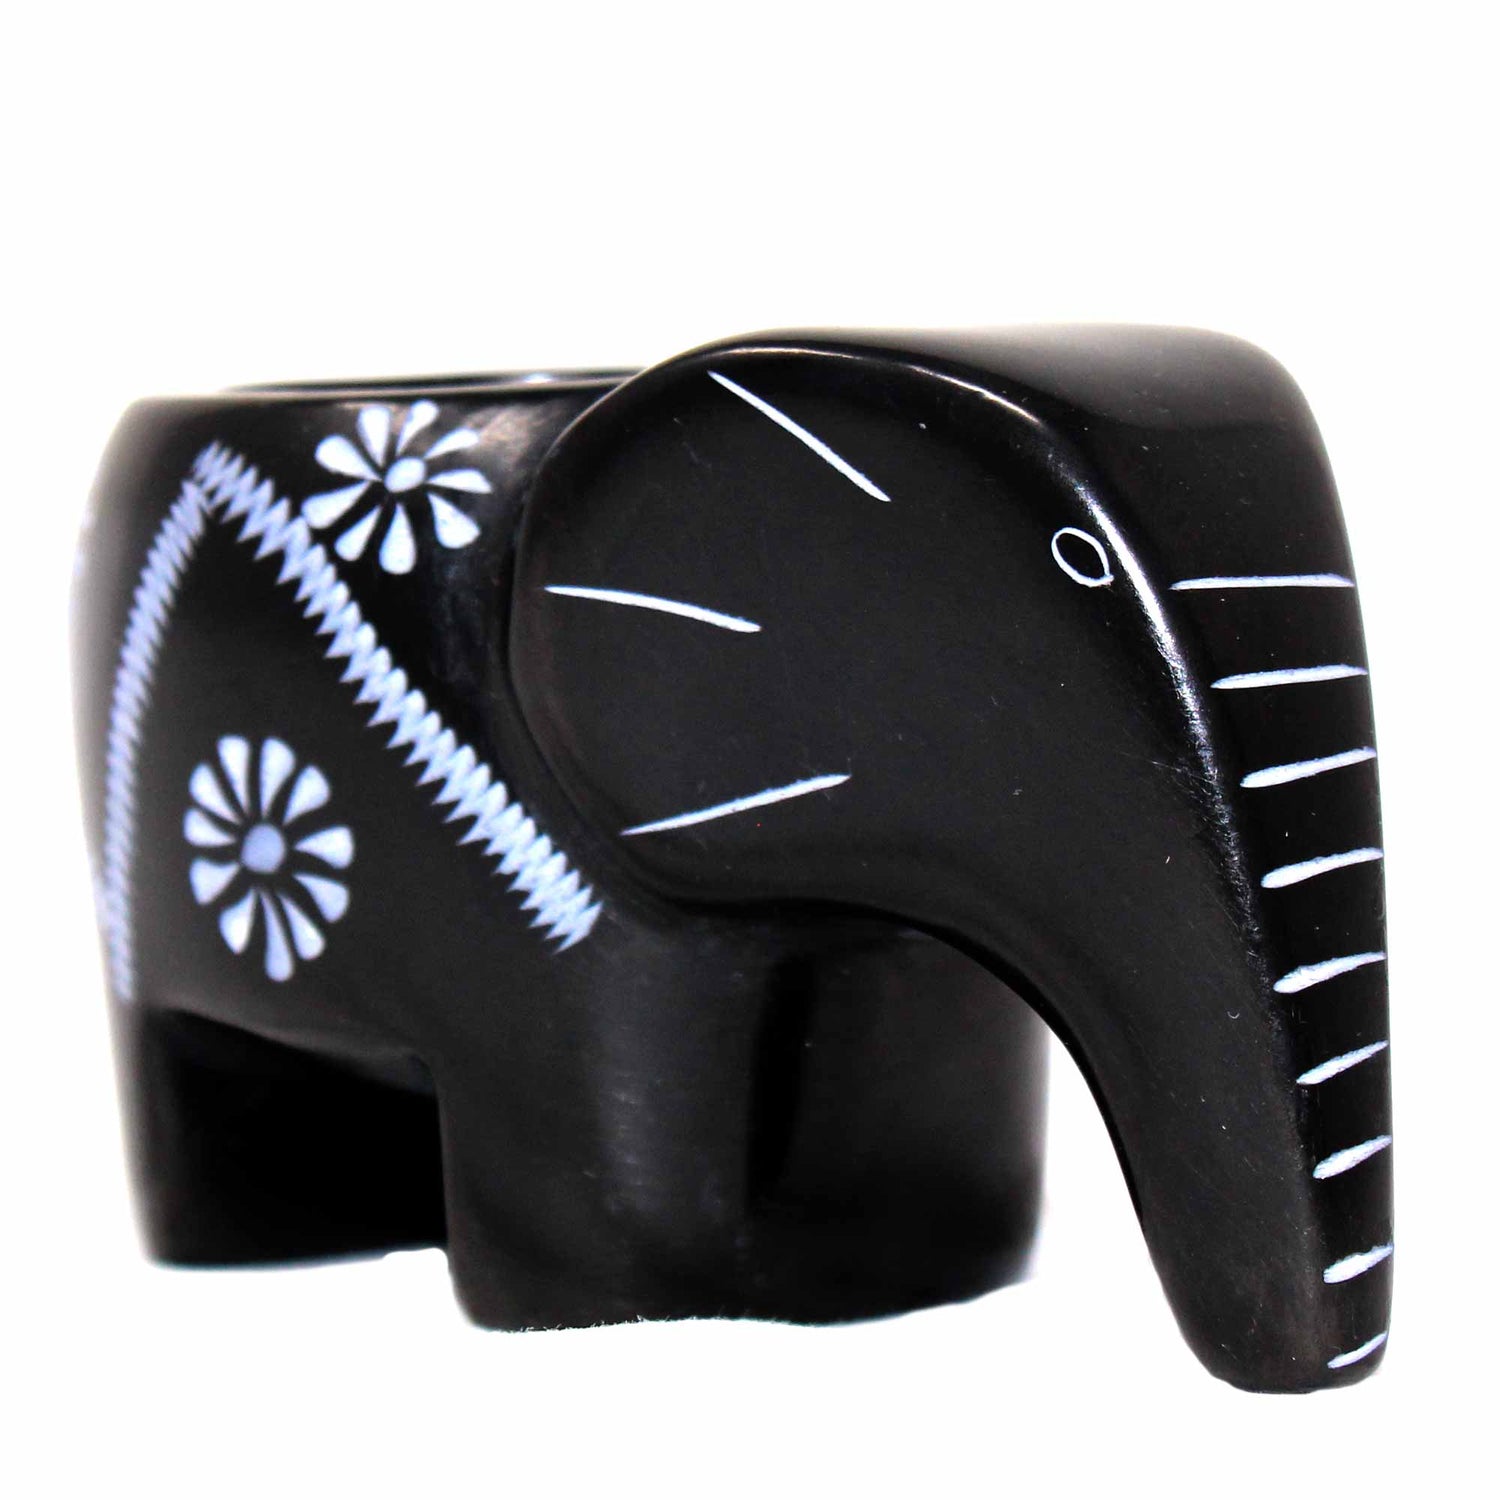 elephant-soapstone-tea-light-black-finish-with-etch-design